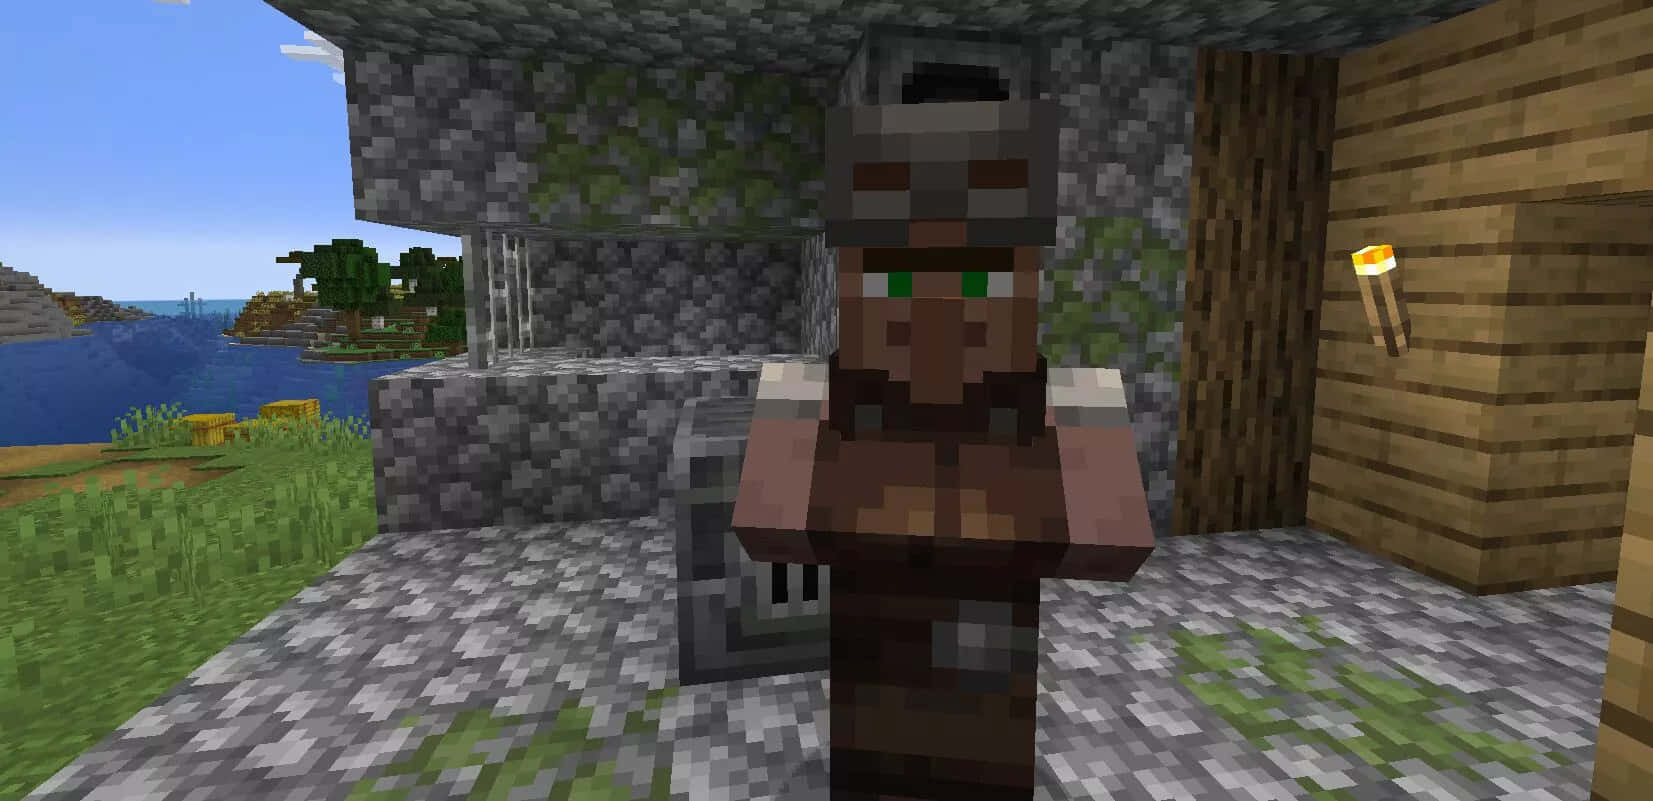 A friendly Minecraft Villager stands amidst a vibrant landscape Wallpaper